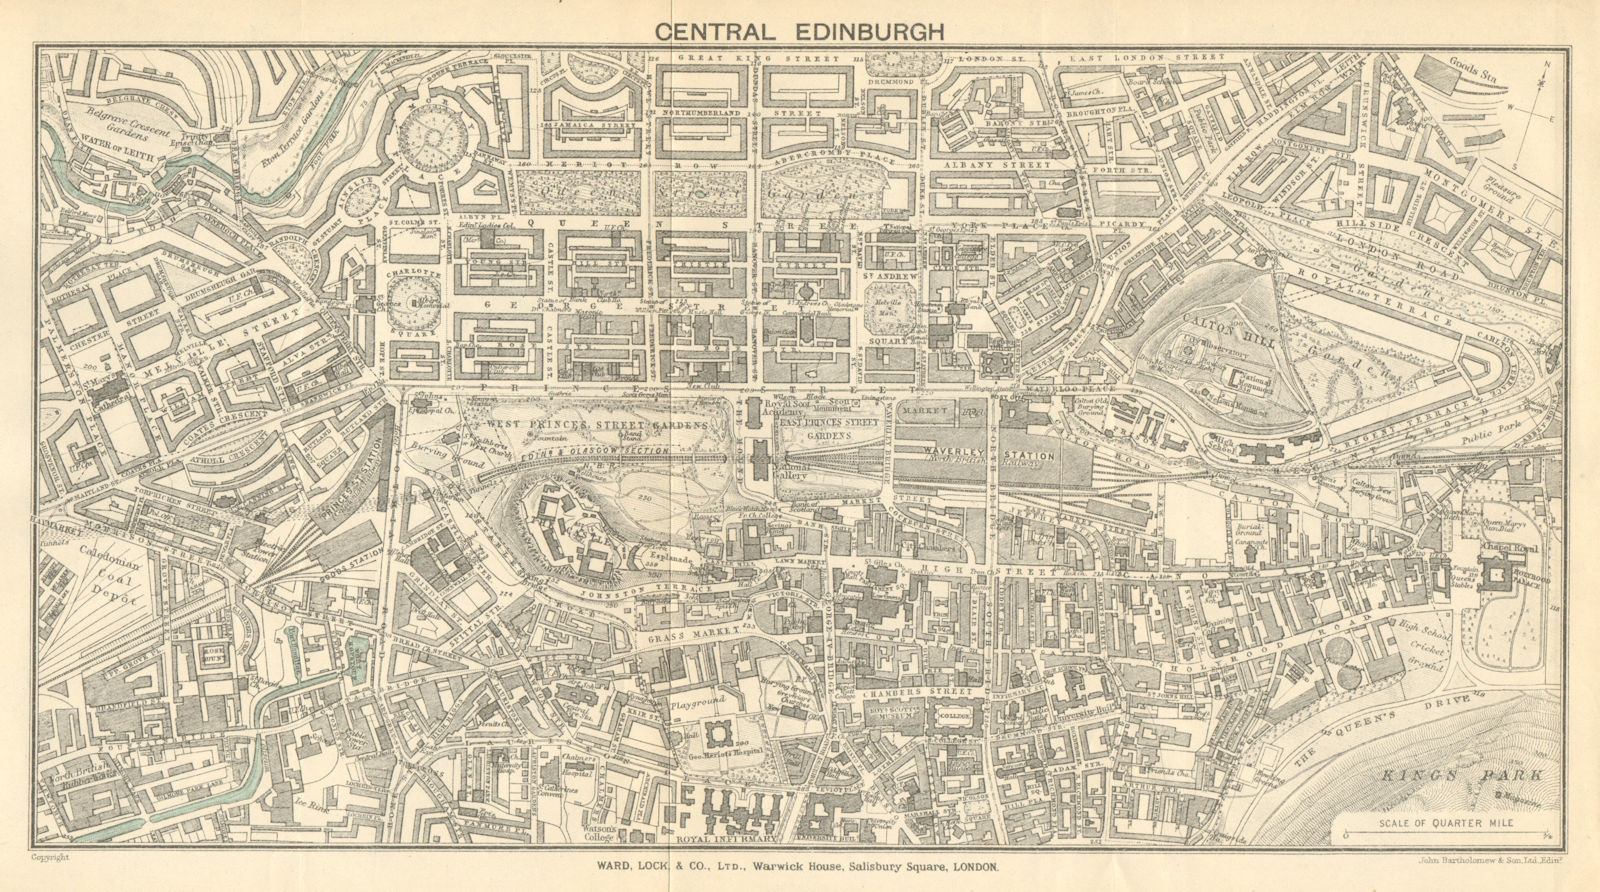 CENTRAL EDINBURGH vintage town/city plan. Scotland. WARD LOCK 1921 old map